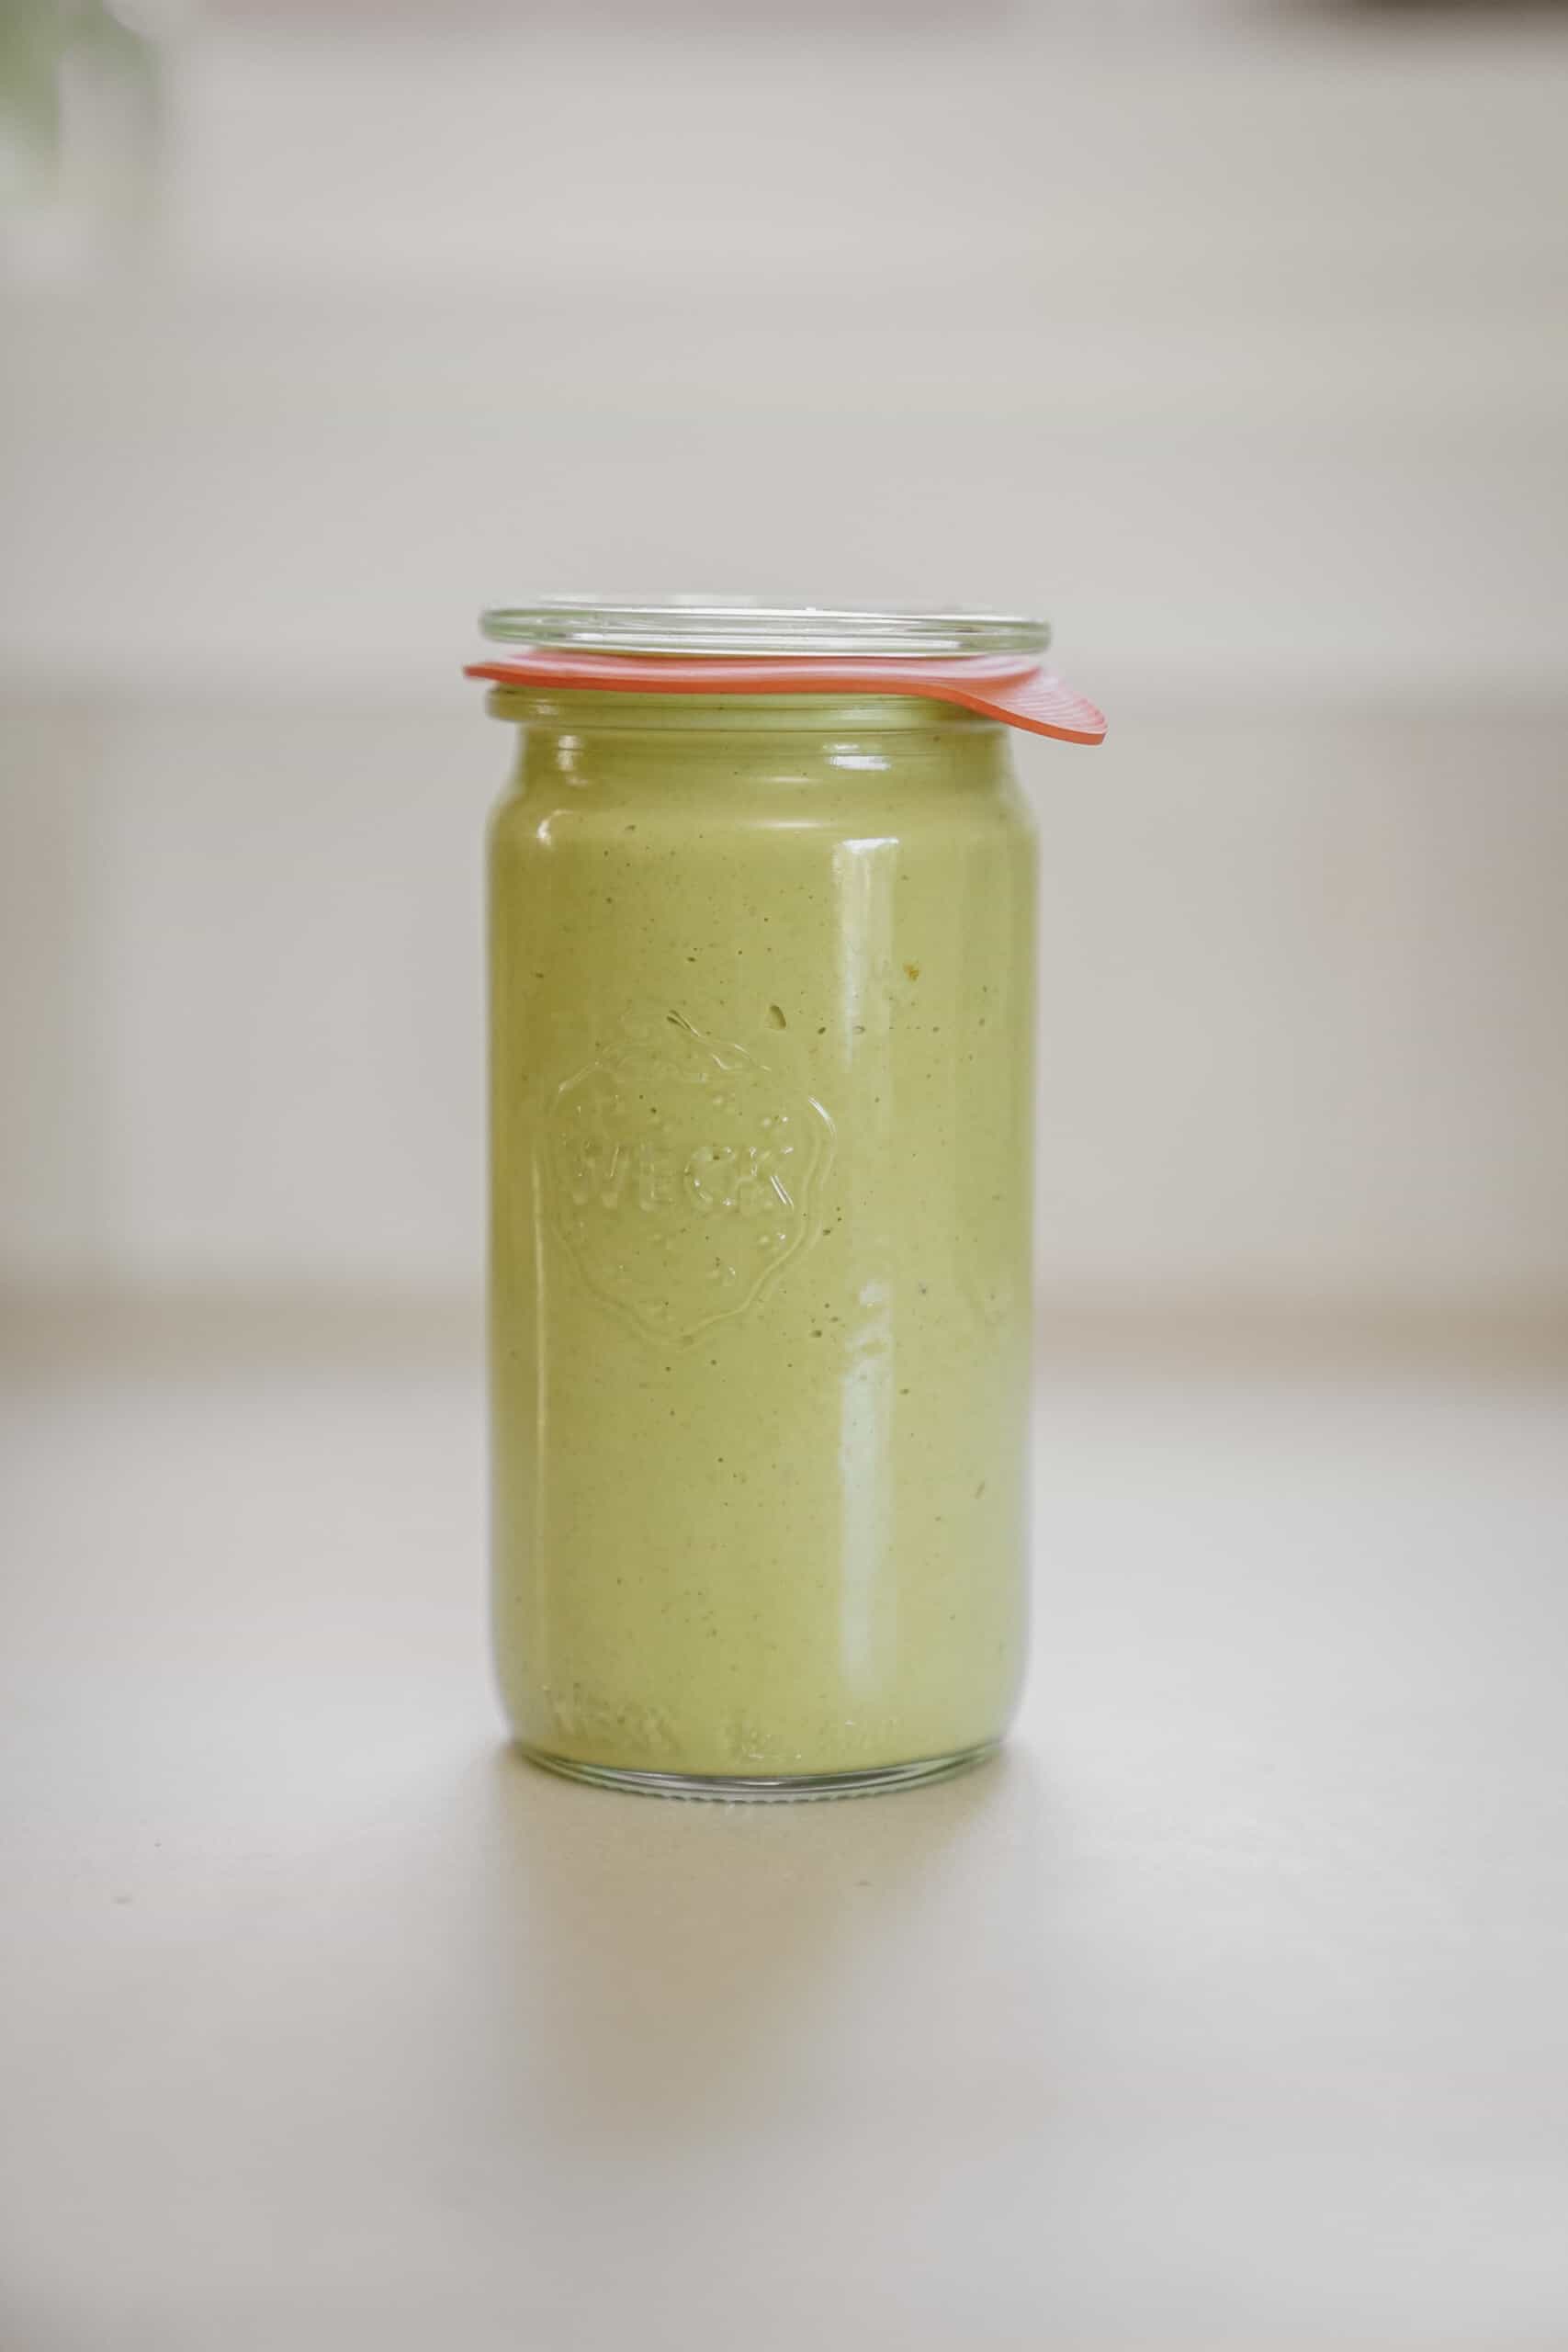 Chimichurri sauce in a jar